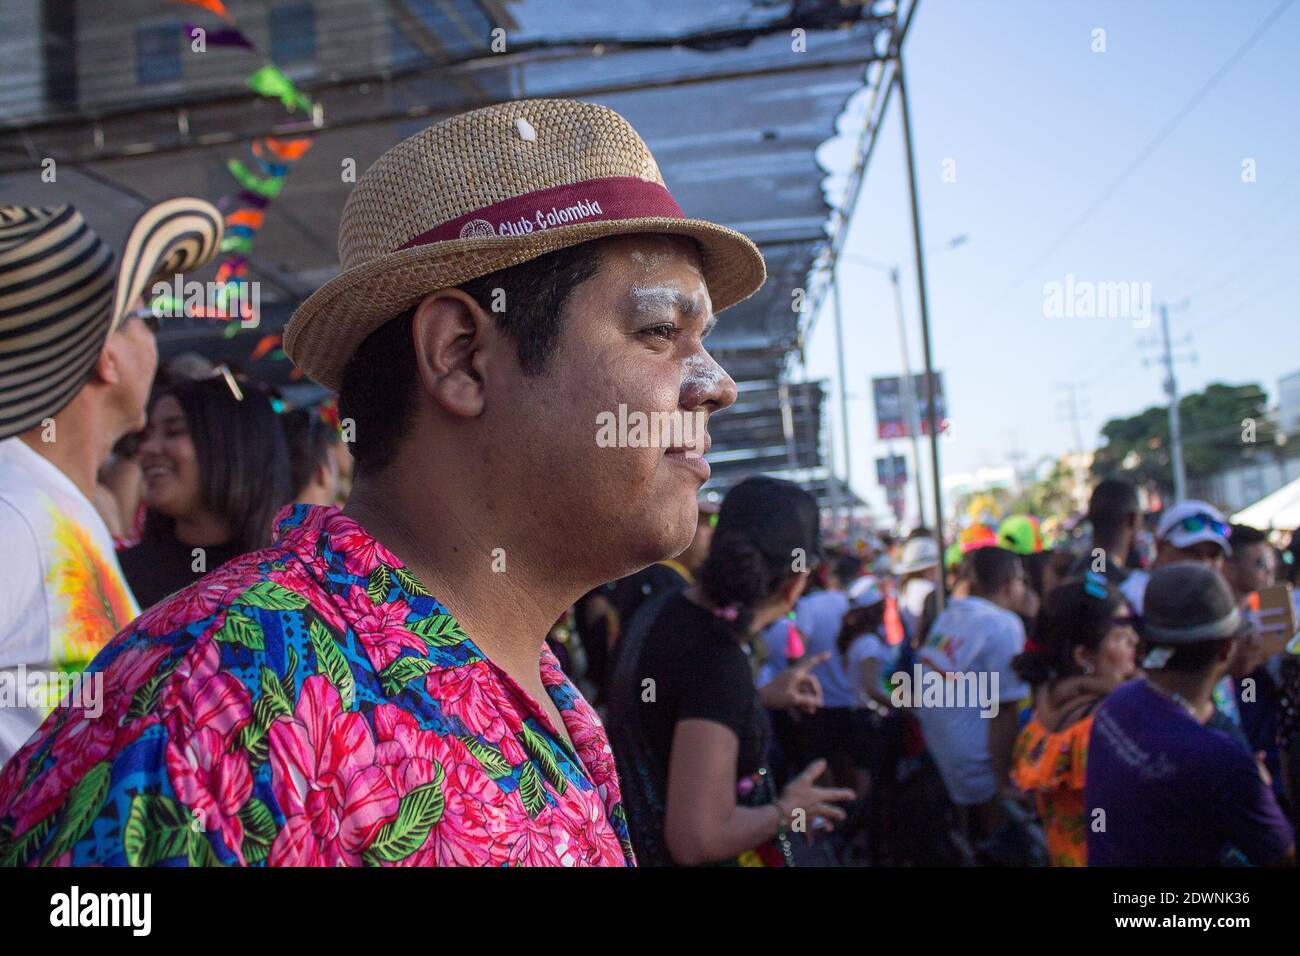 BARRANQUILLA, COLOMBIA - Dec 20, 2020: People enjoy the Barranquilla carnival Stock Photo